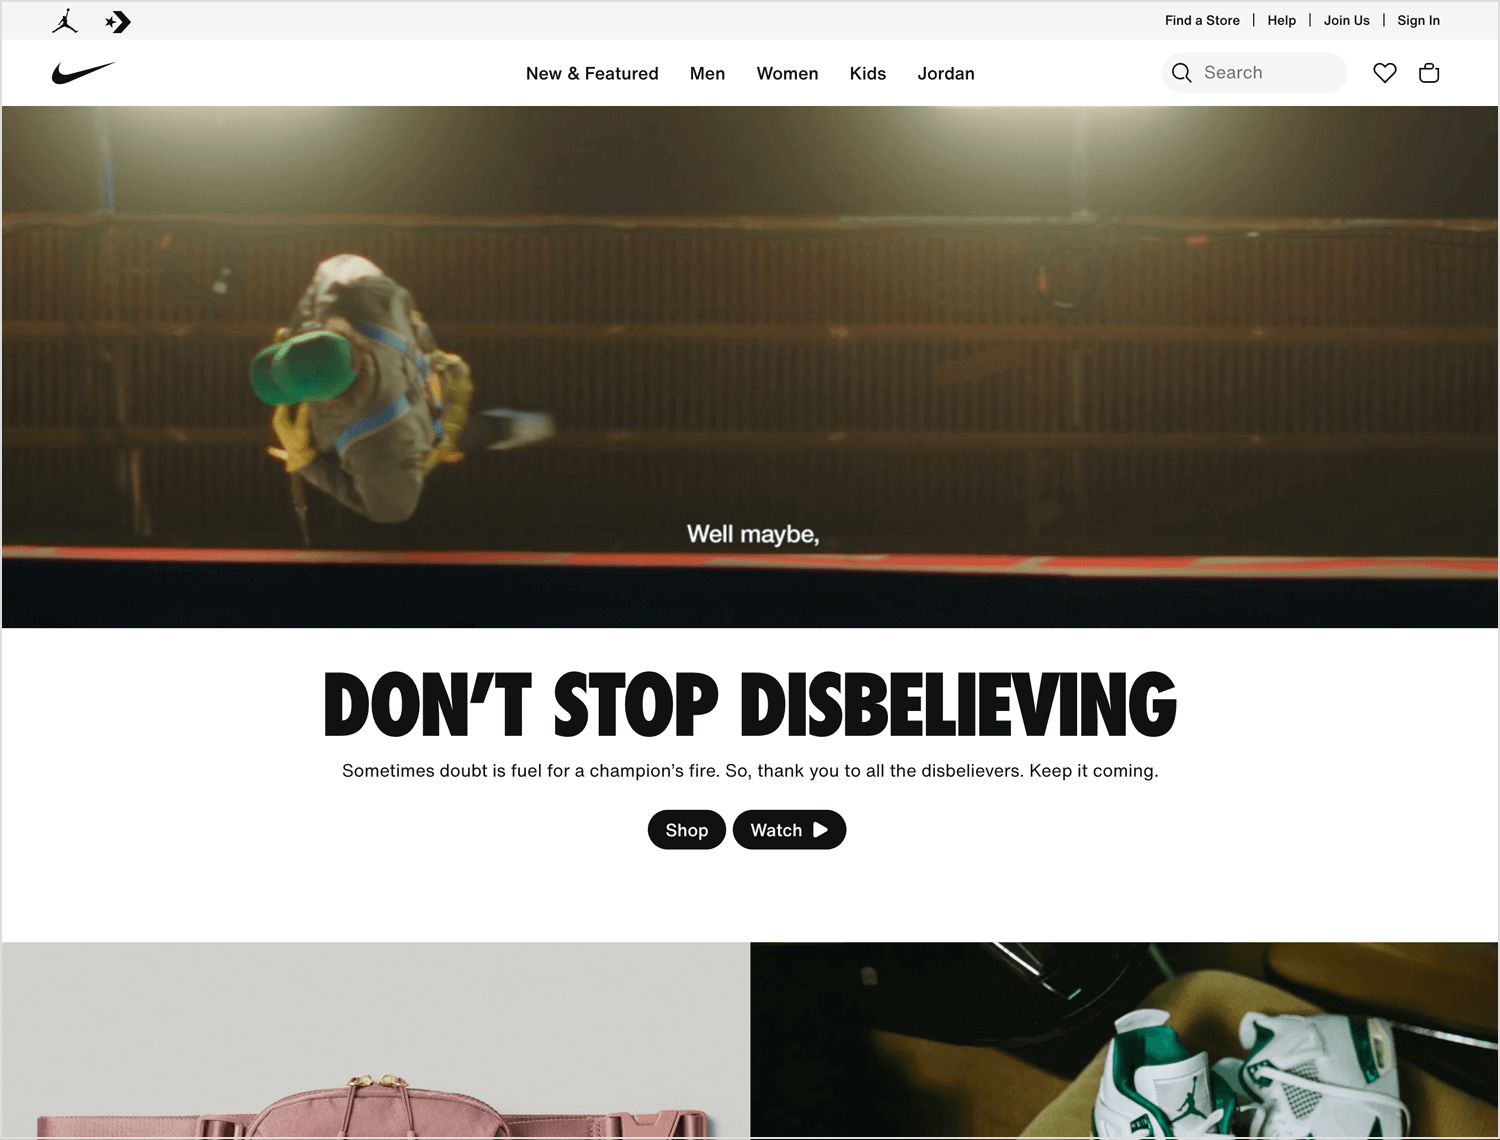 Nike homepage with a navigation bar